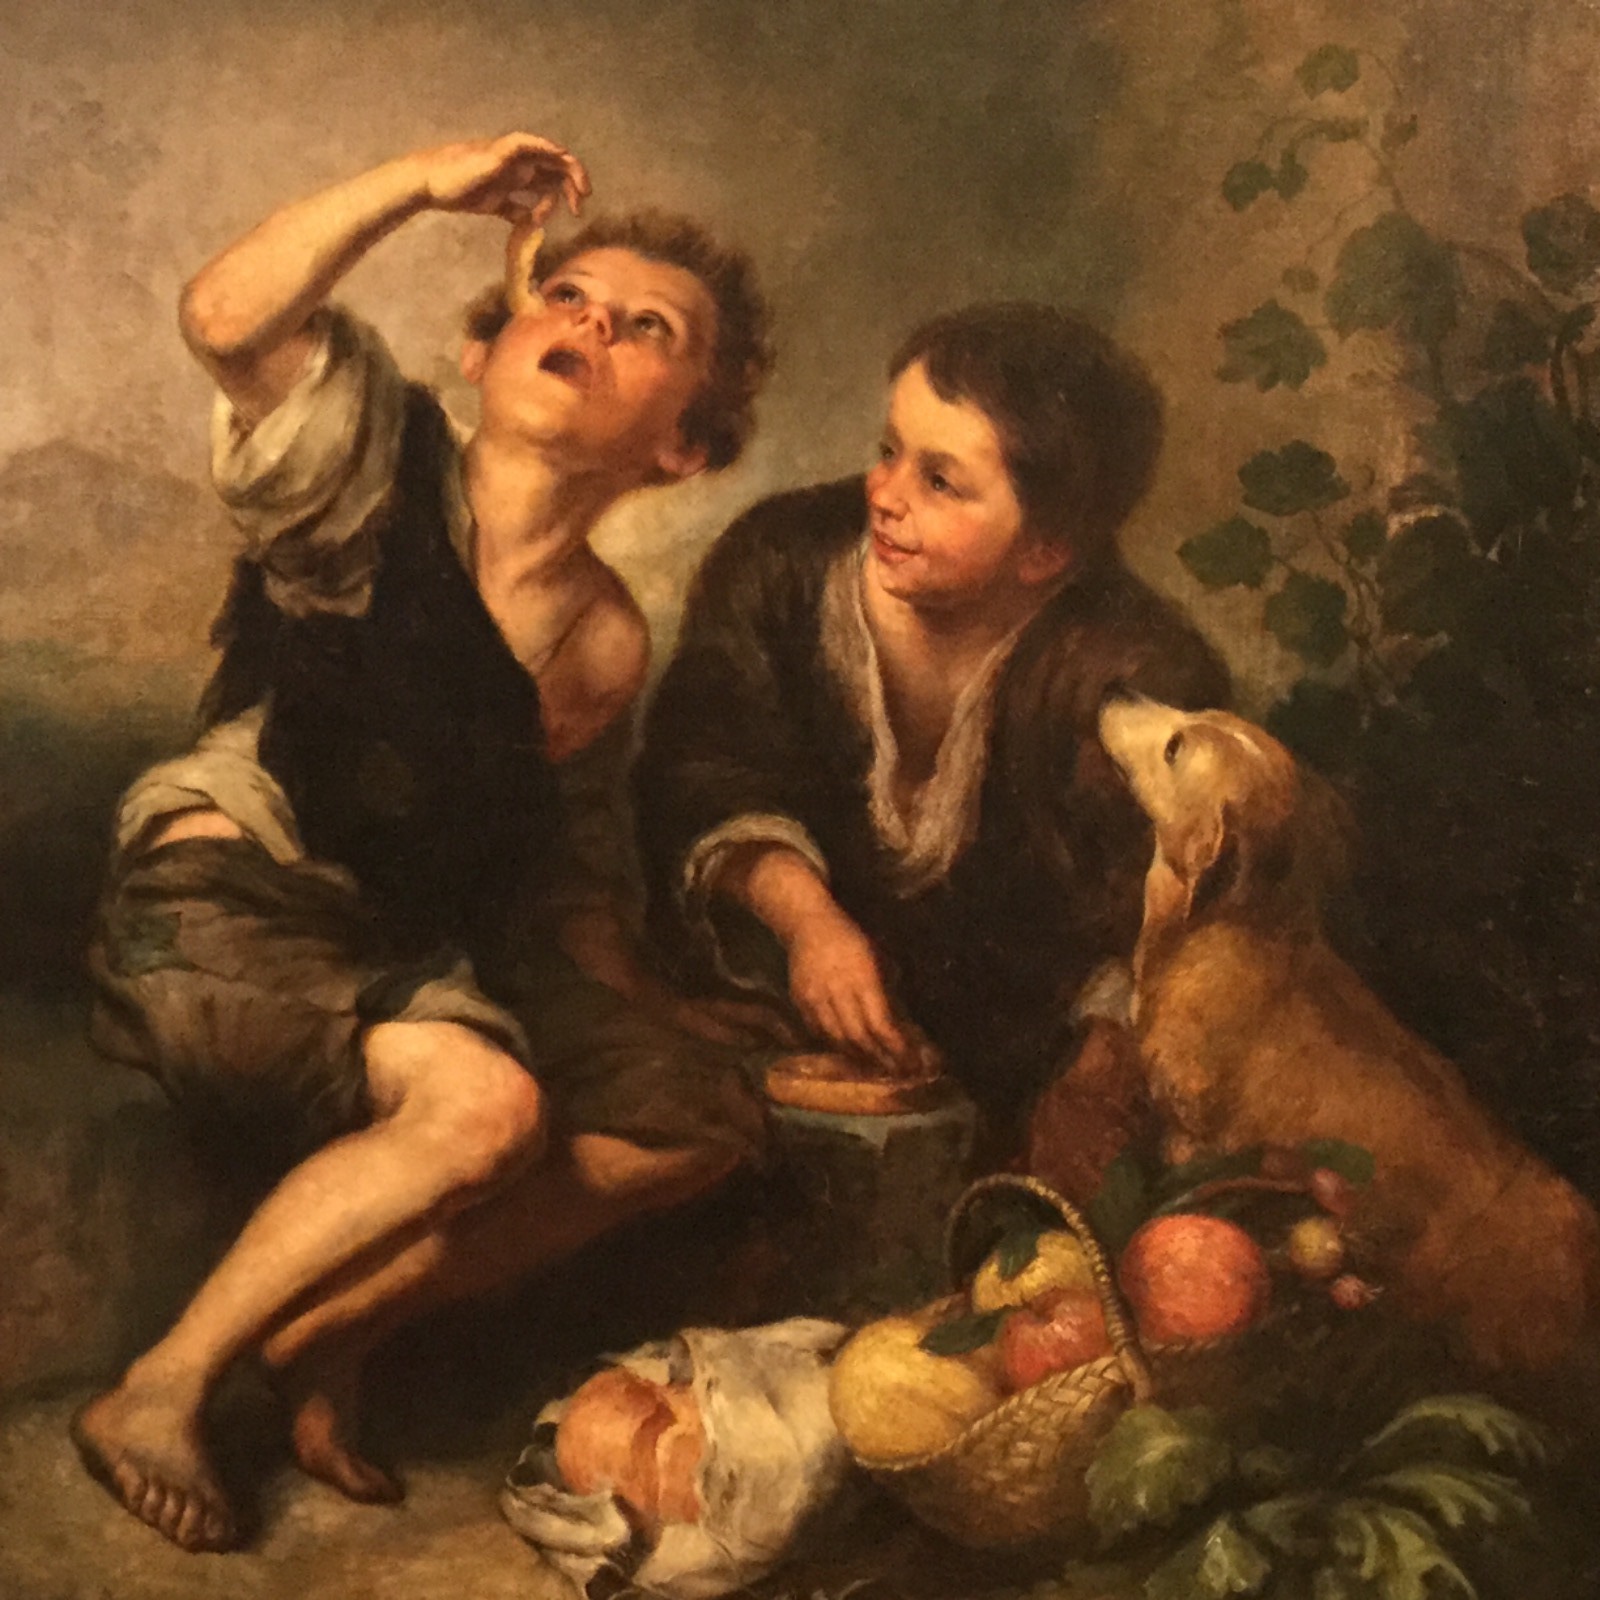 Мурильо. Бартоломе Эстебан Мурильо (1617-1682). Бартоломе Эстебан Мурильо. Бартоломео Эстебан Мурильо (1618—1682). Художник Бартоломе Эстебан Мурильо.